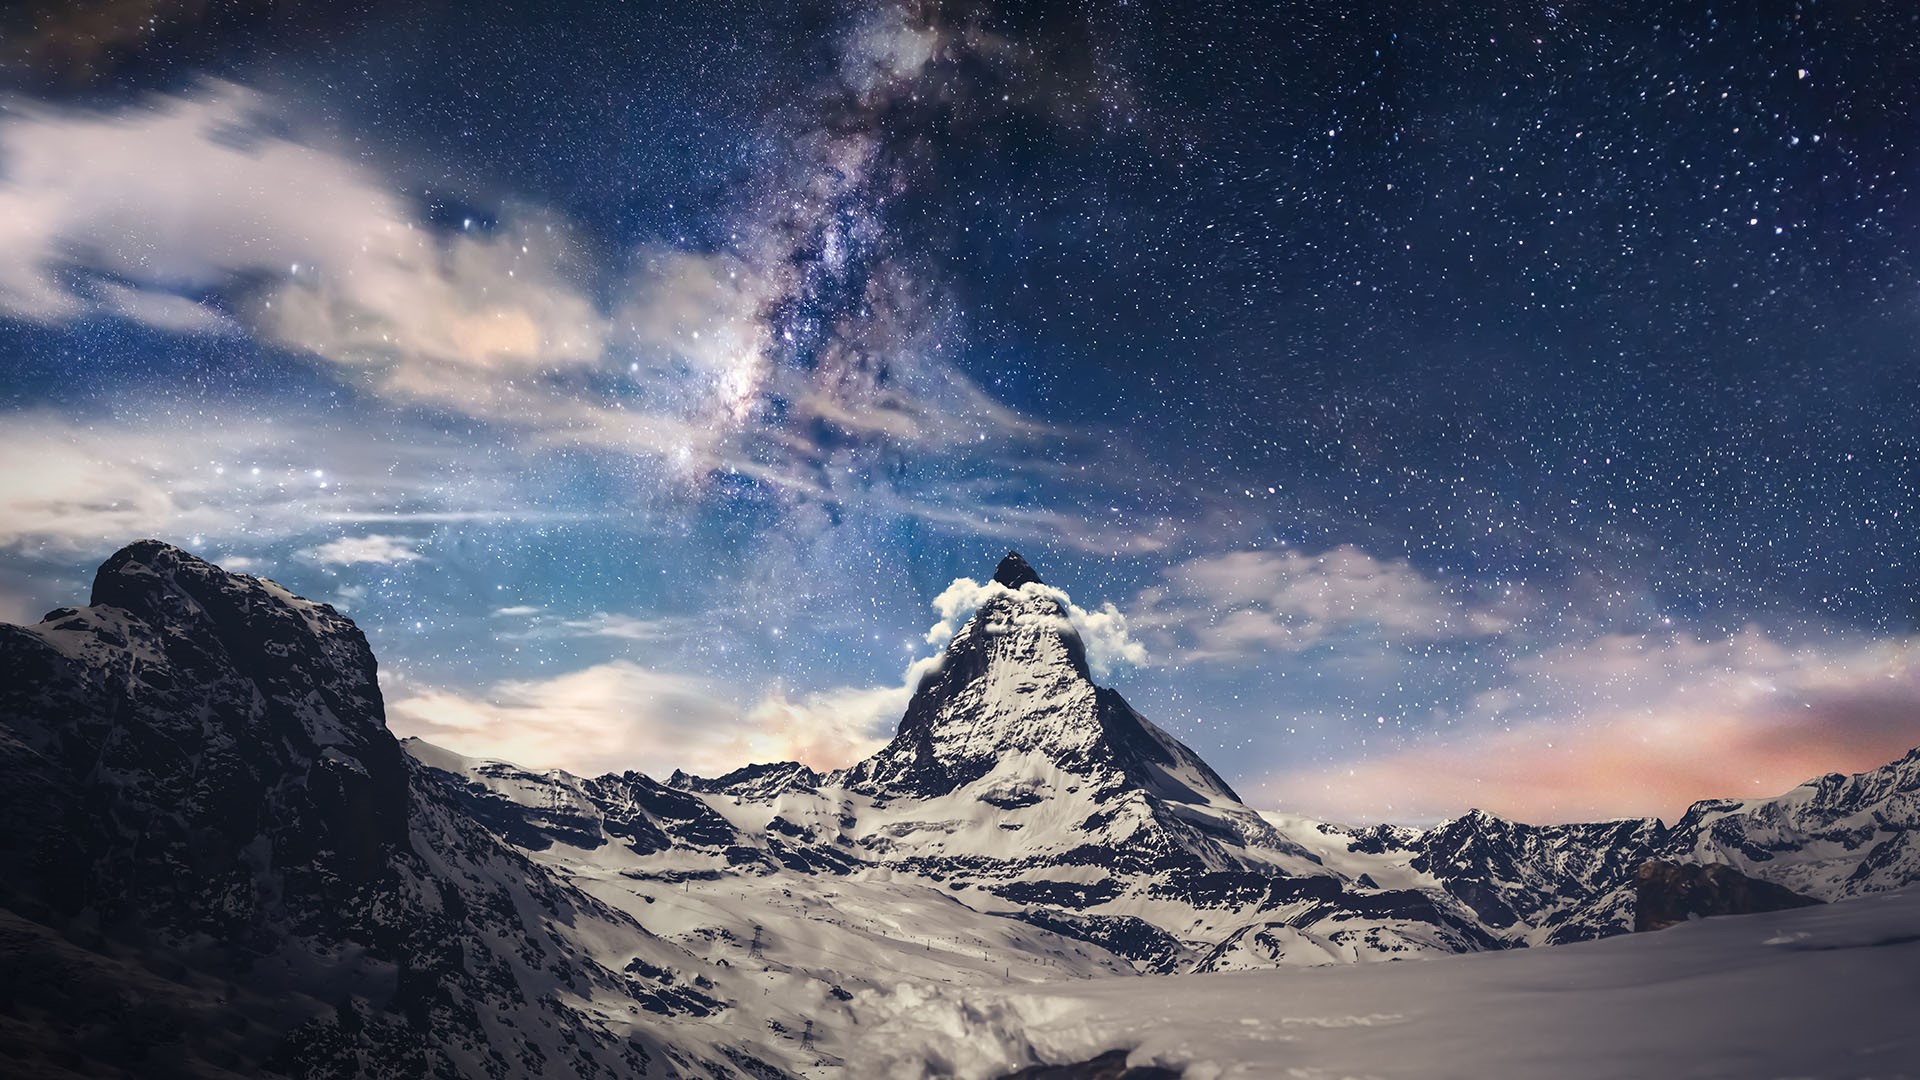 Nature Landscape Far View Mountains Snow Clouds Rocks Stars Galaxy Milky Way Night Matterhorn Zermat 1920x1080